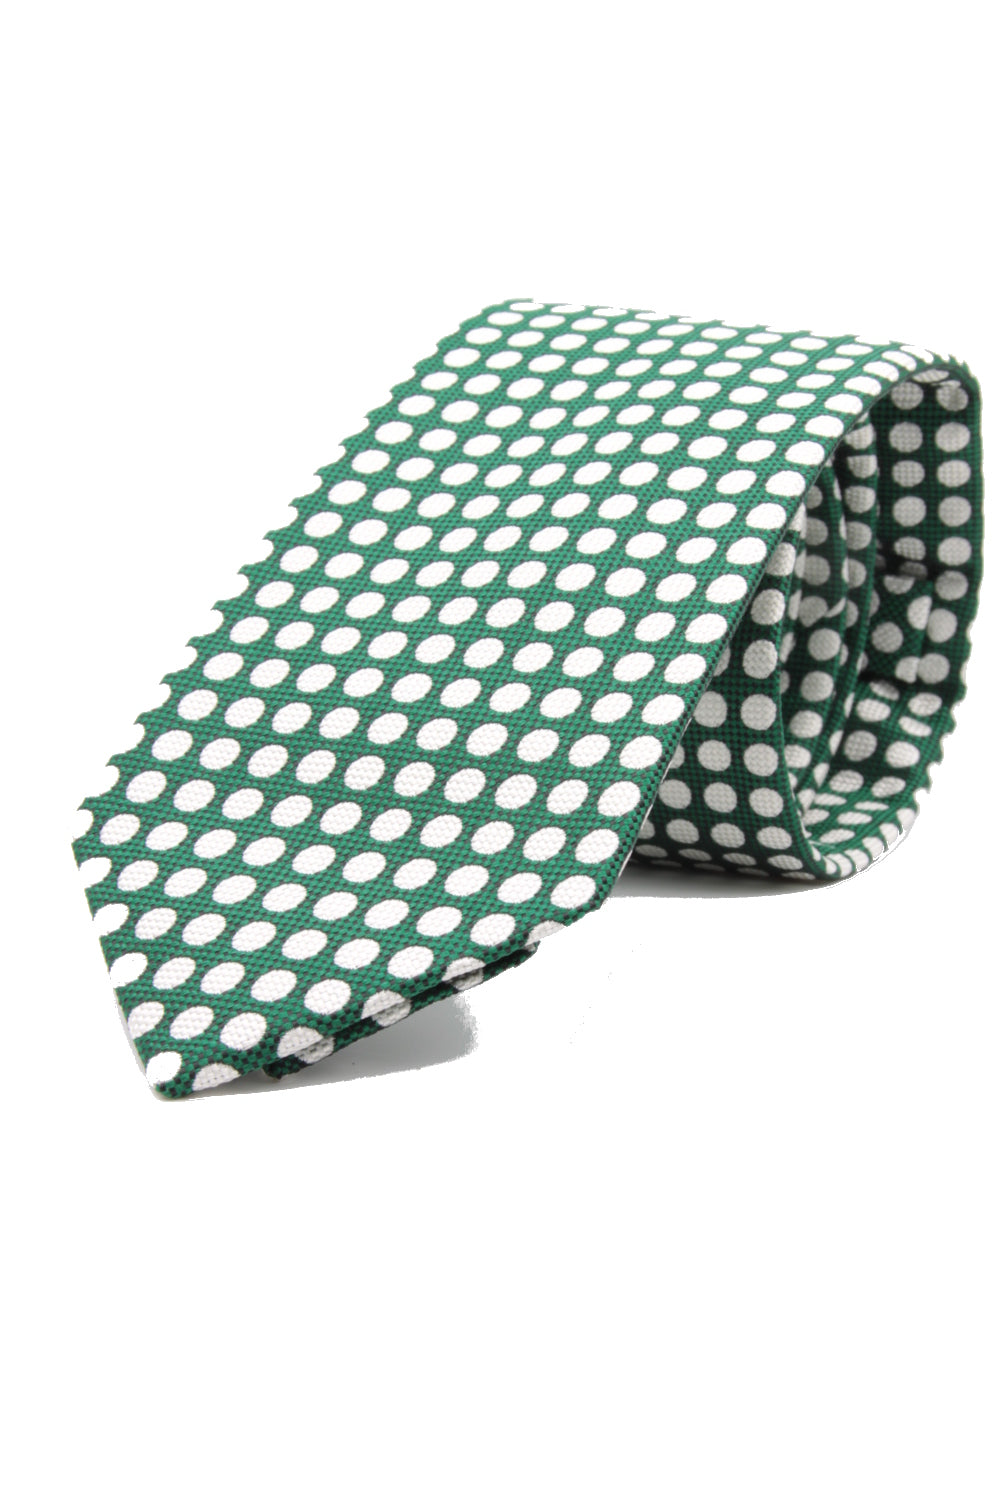 drake's Churchill's spot emerald green and white tie